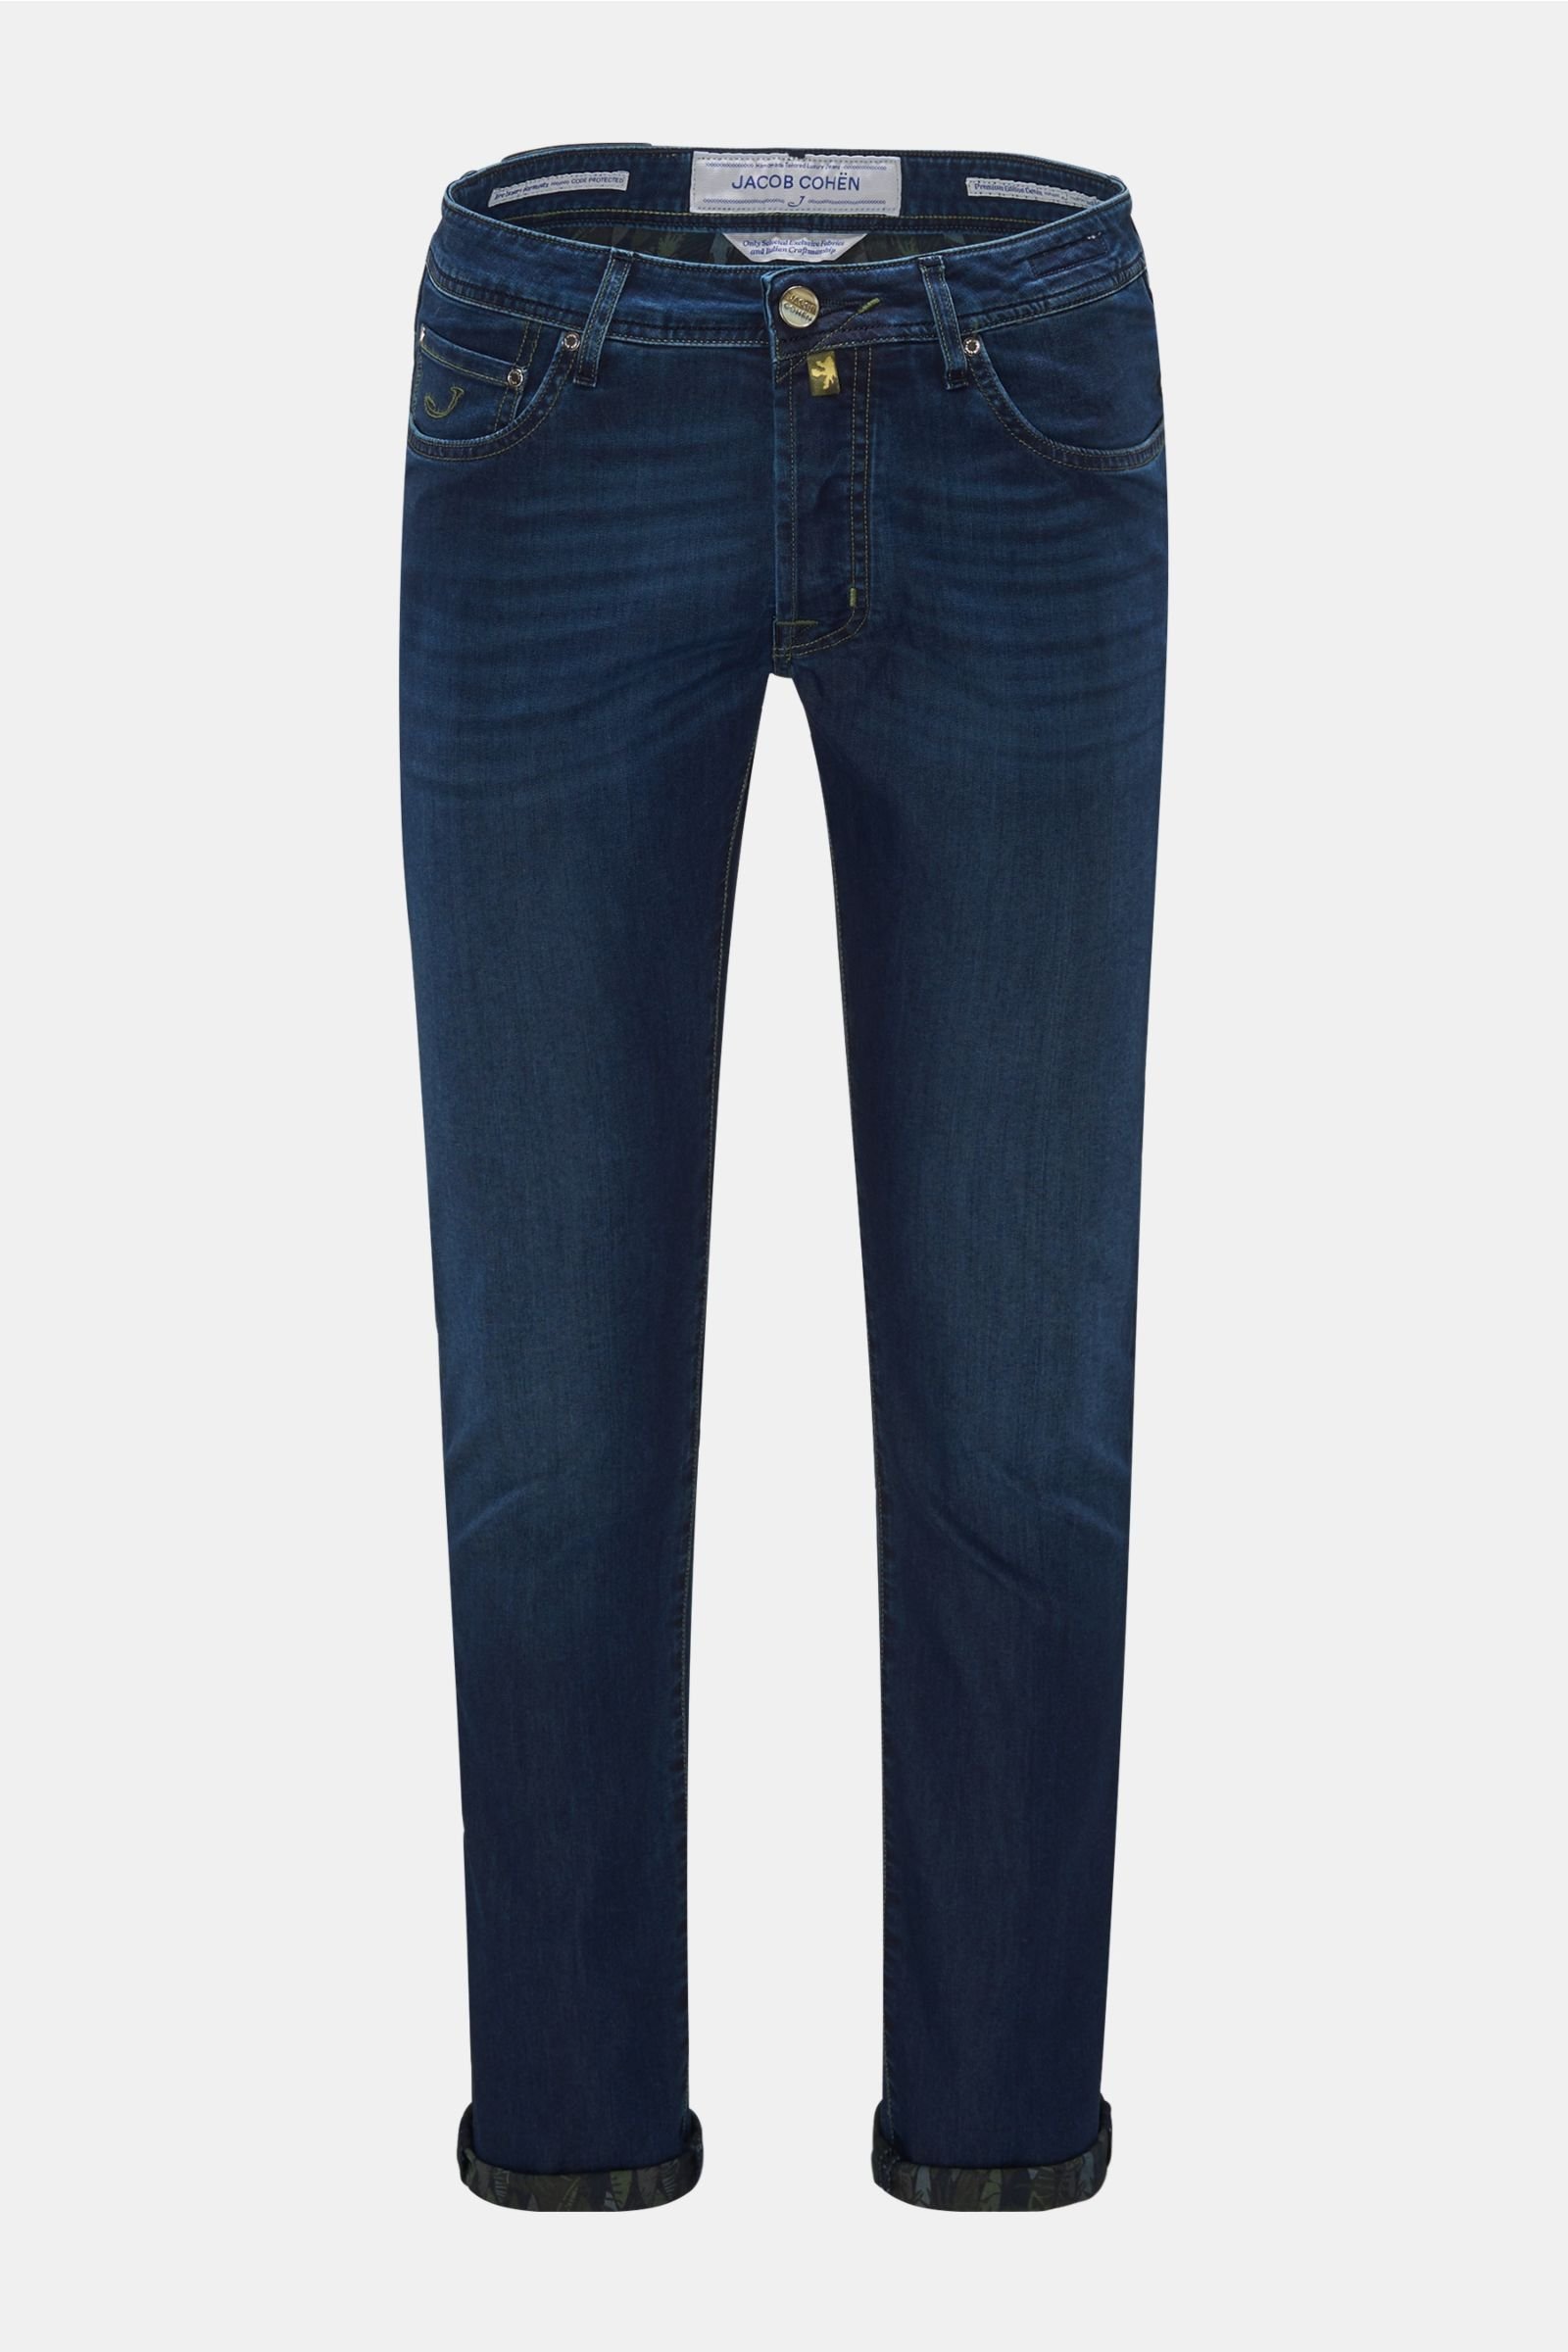 Jeans 'J688 Comfort Slim Fit' dark blue